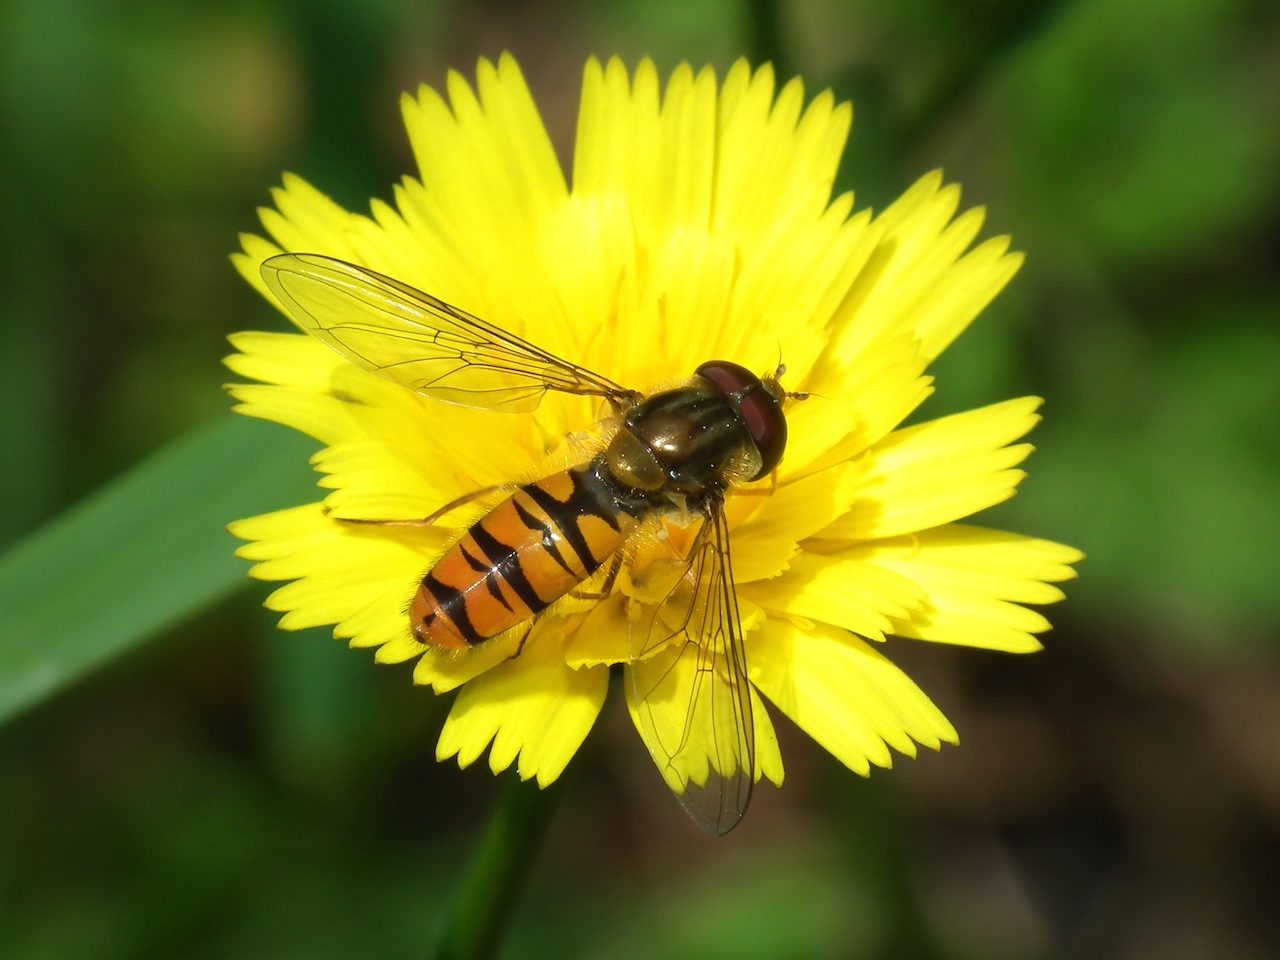 mosca de corpo amarelo sobre flor amarela